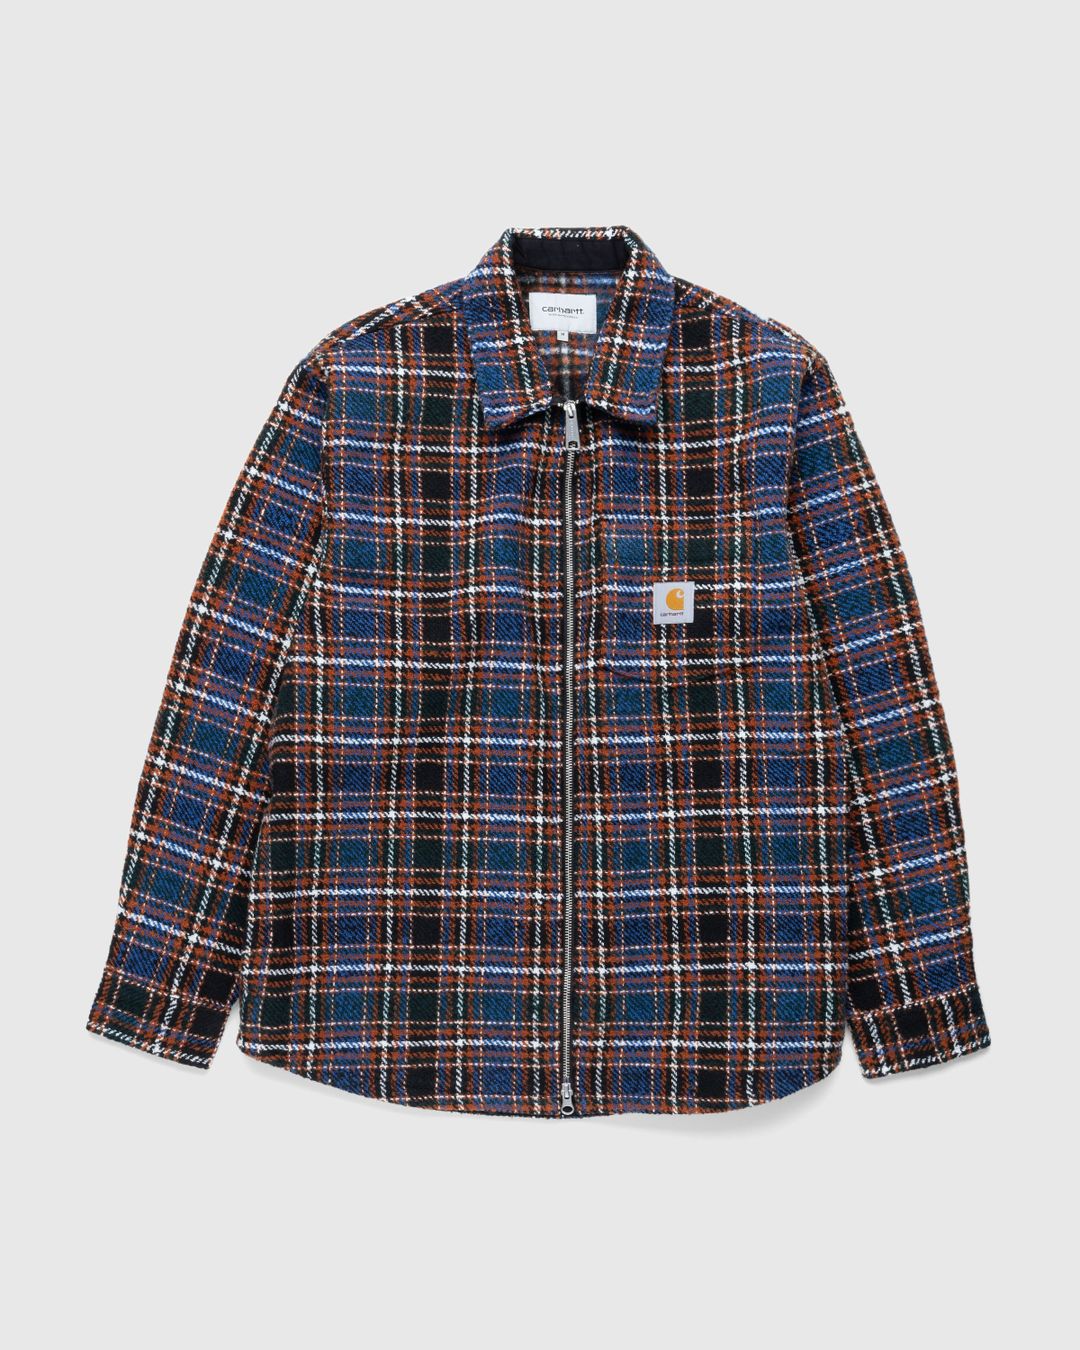 Carhartt WIP – Stroy Check Shirt Jacket Multi | Highsnobiety Shop